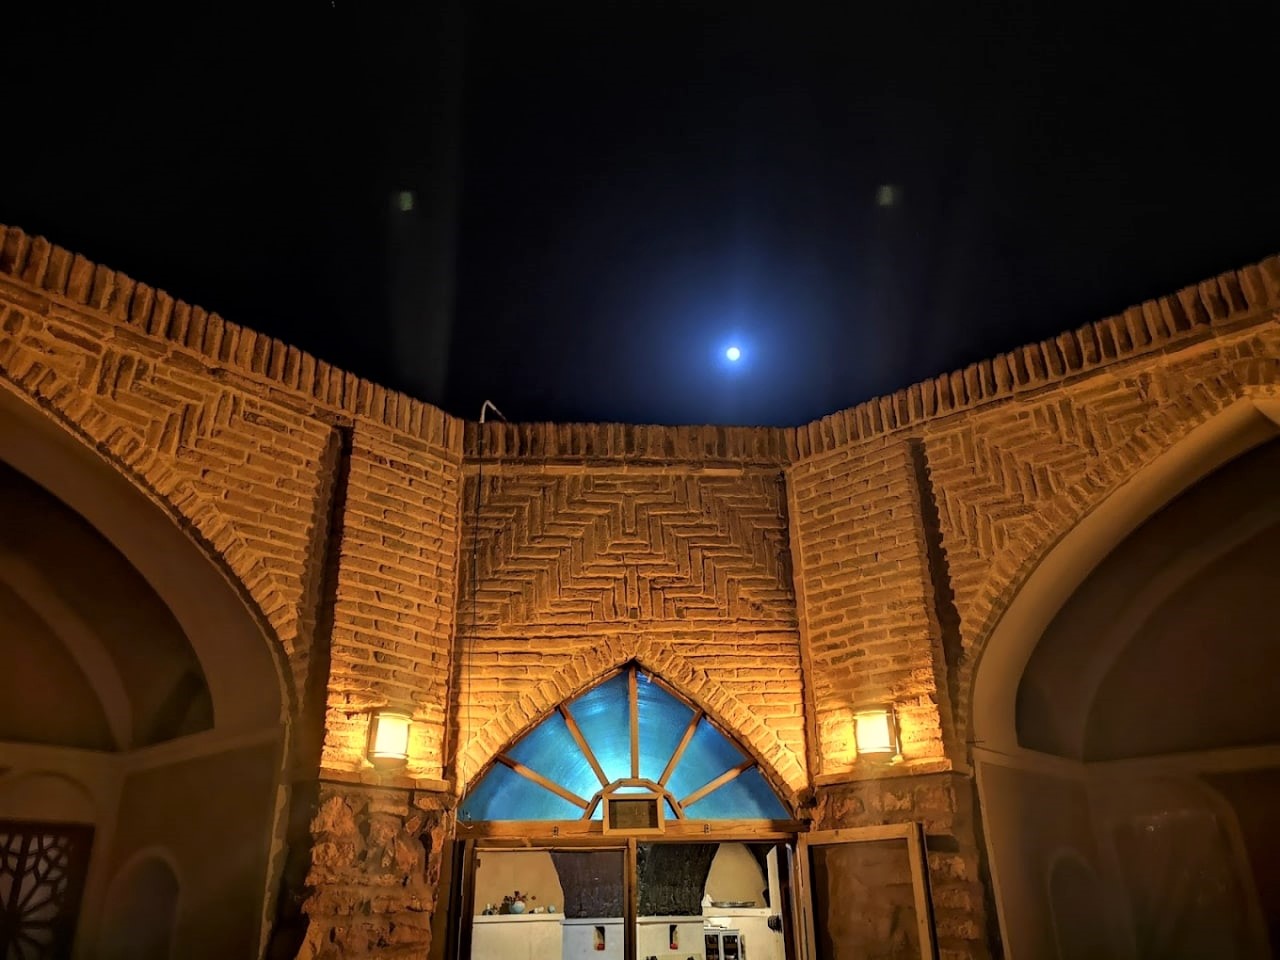 Desert اجاره کاروانسرا کویری در انارک اصفهان - 18